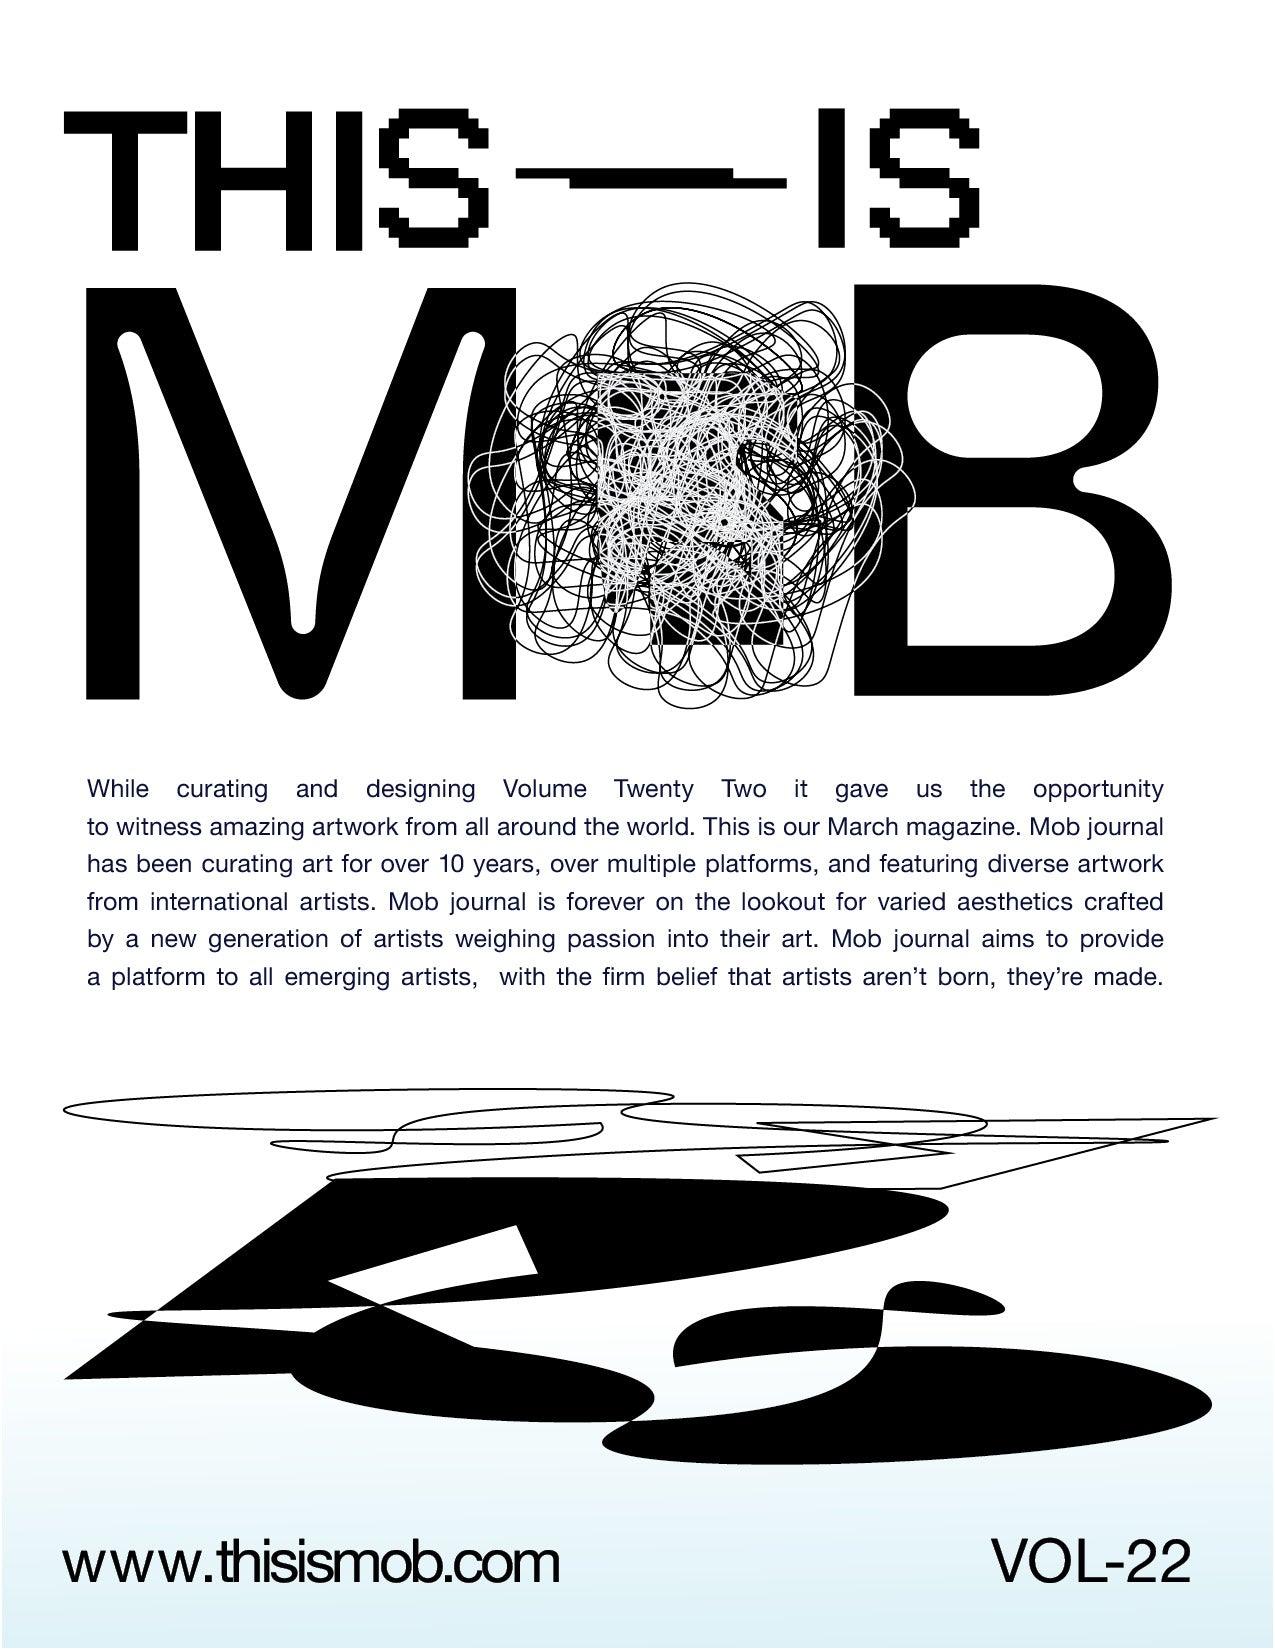 MOB JOURNAL | VOLUME TWENTY TWO | ISSUE #14 - Mob Journal